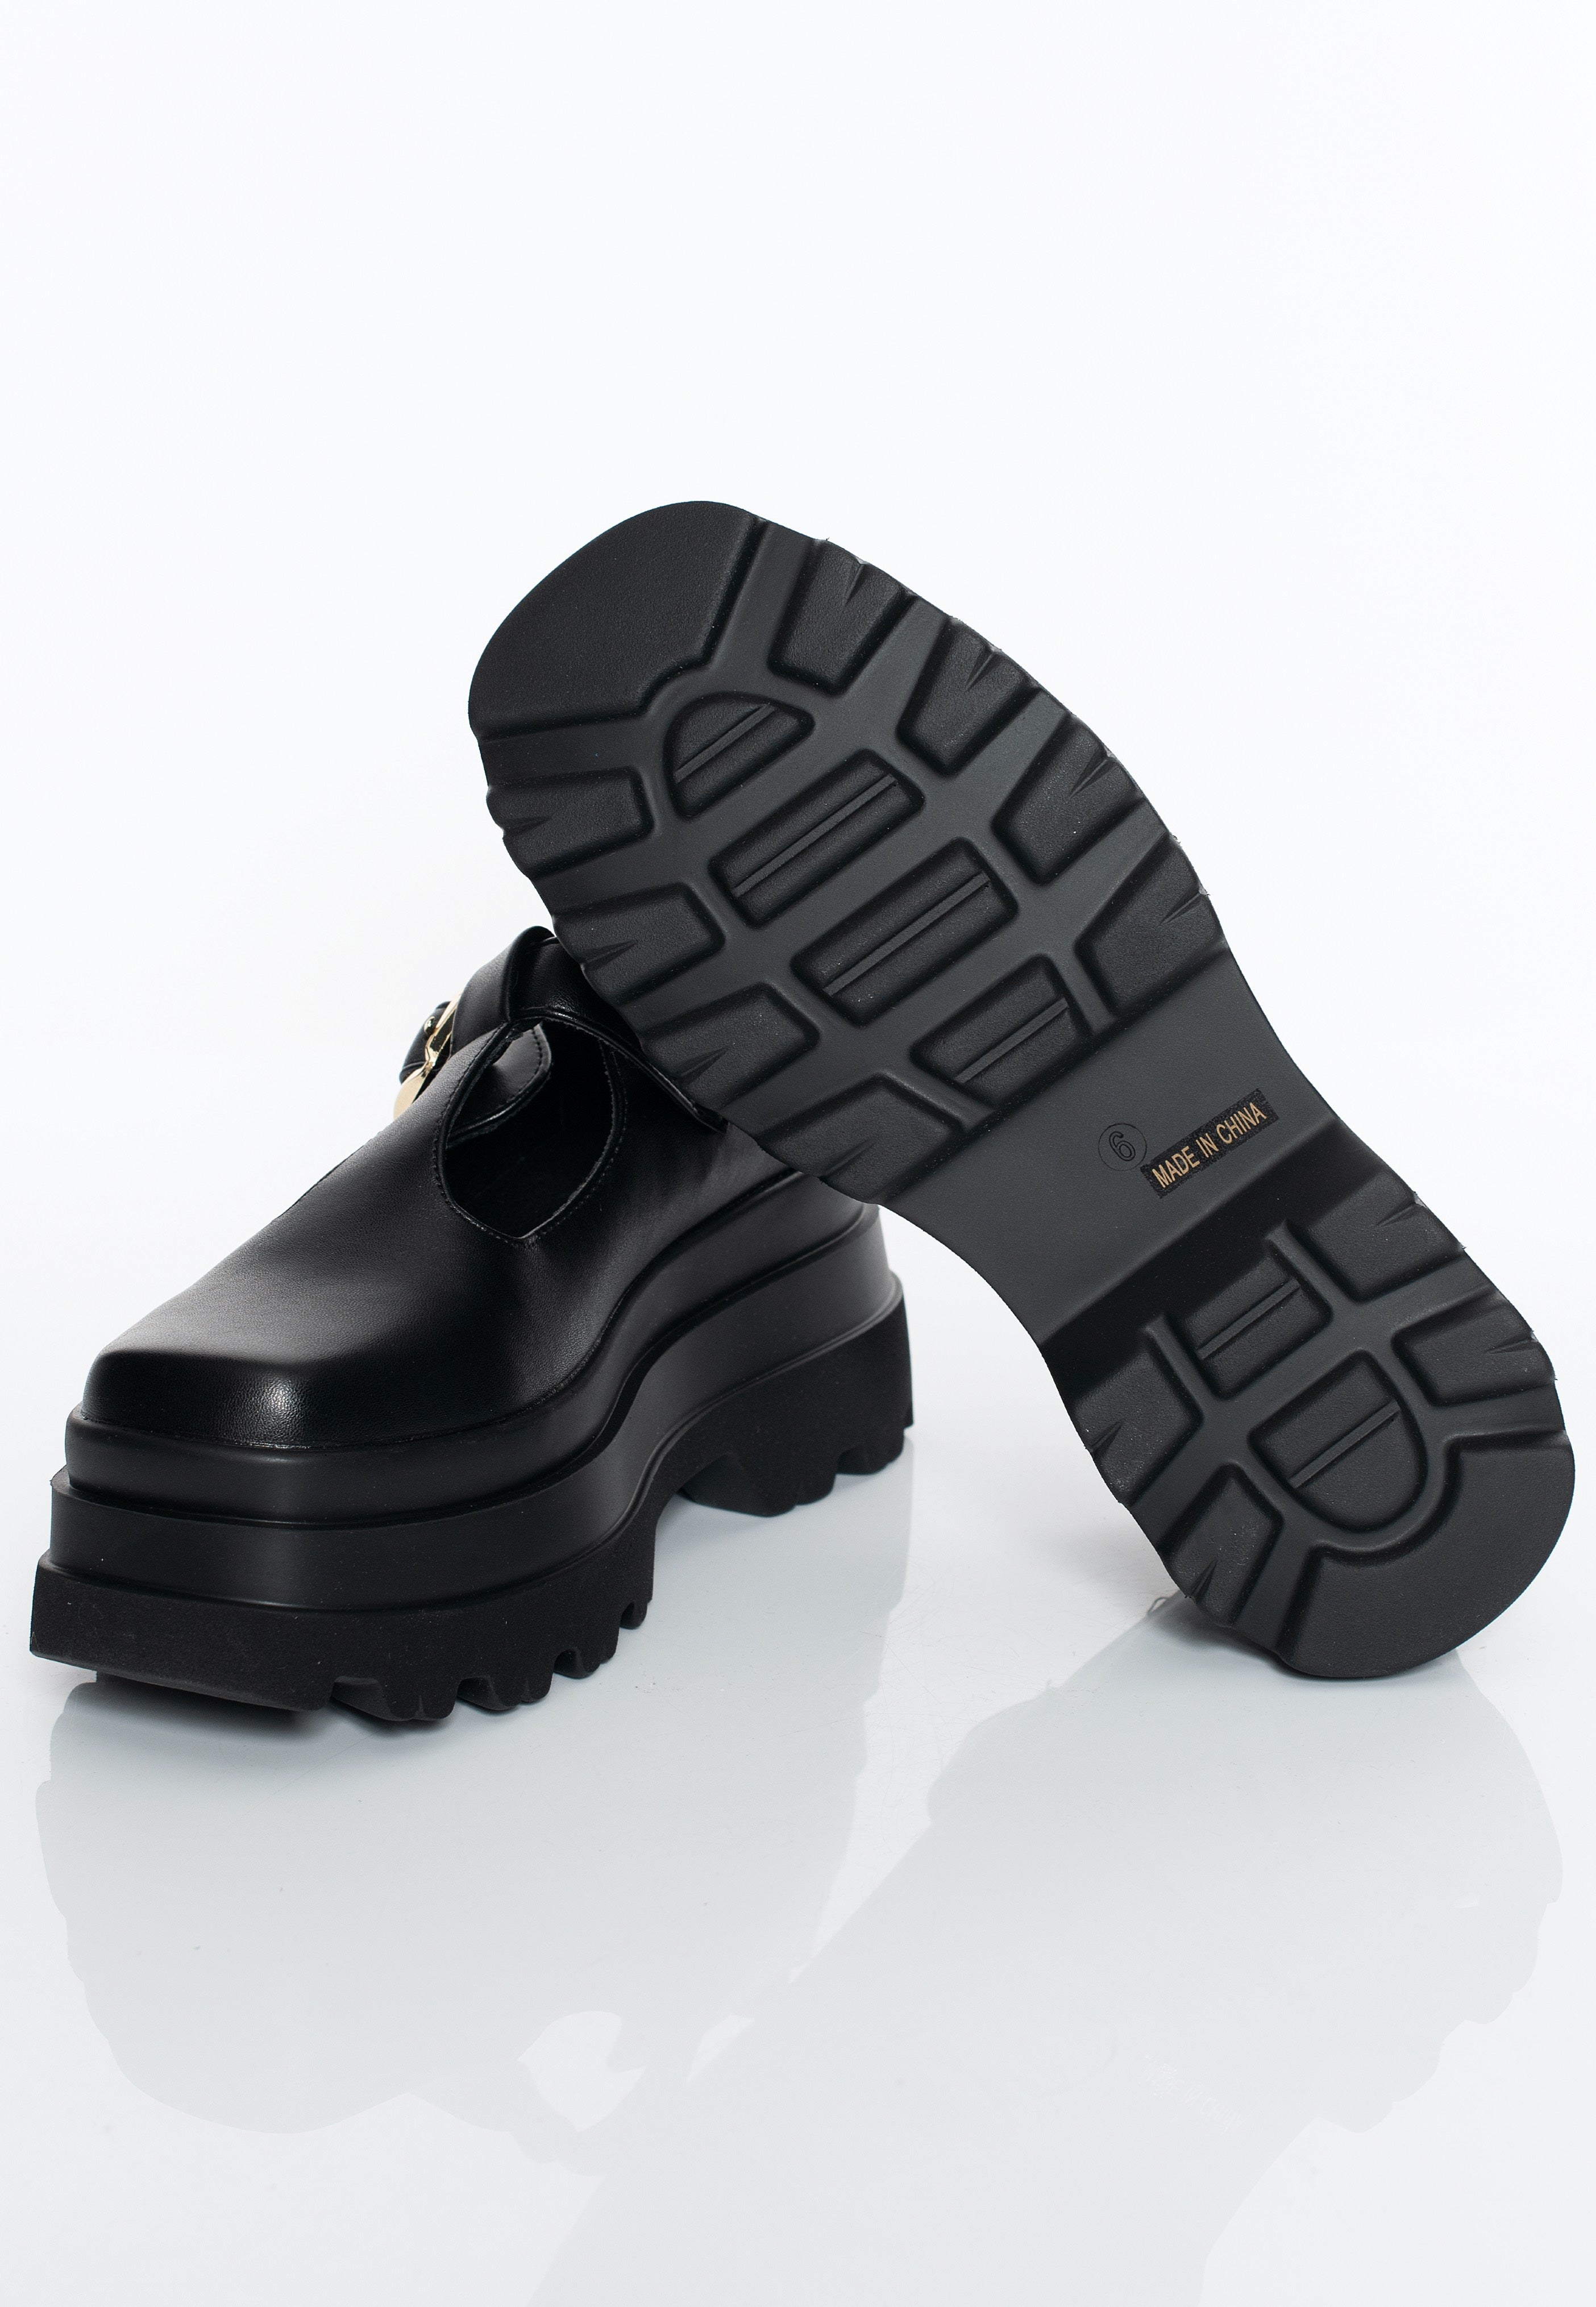 Koi Footwear - Silent Amity Trident Platform Mary Janes Black - Girl Shoes